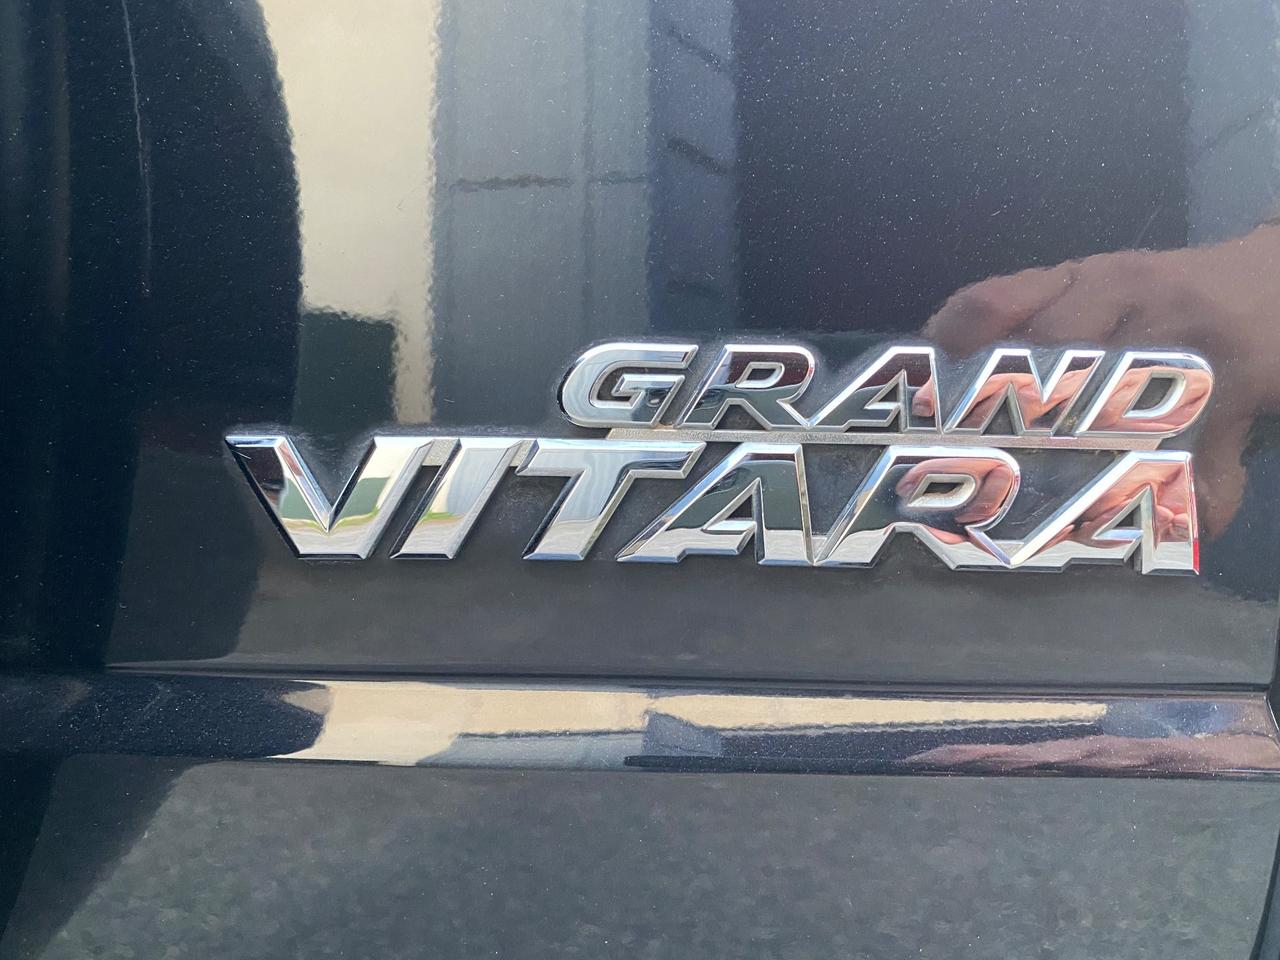 Suzuki Grand Vitara Grand Vitara 1.9 DDiS 5 porte